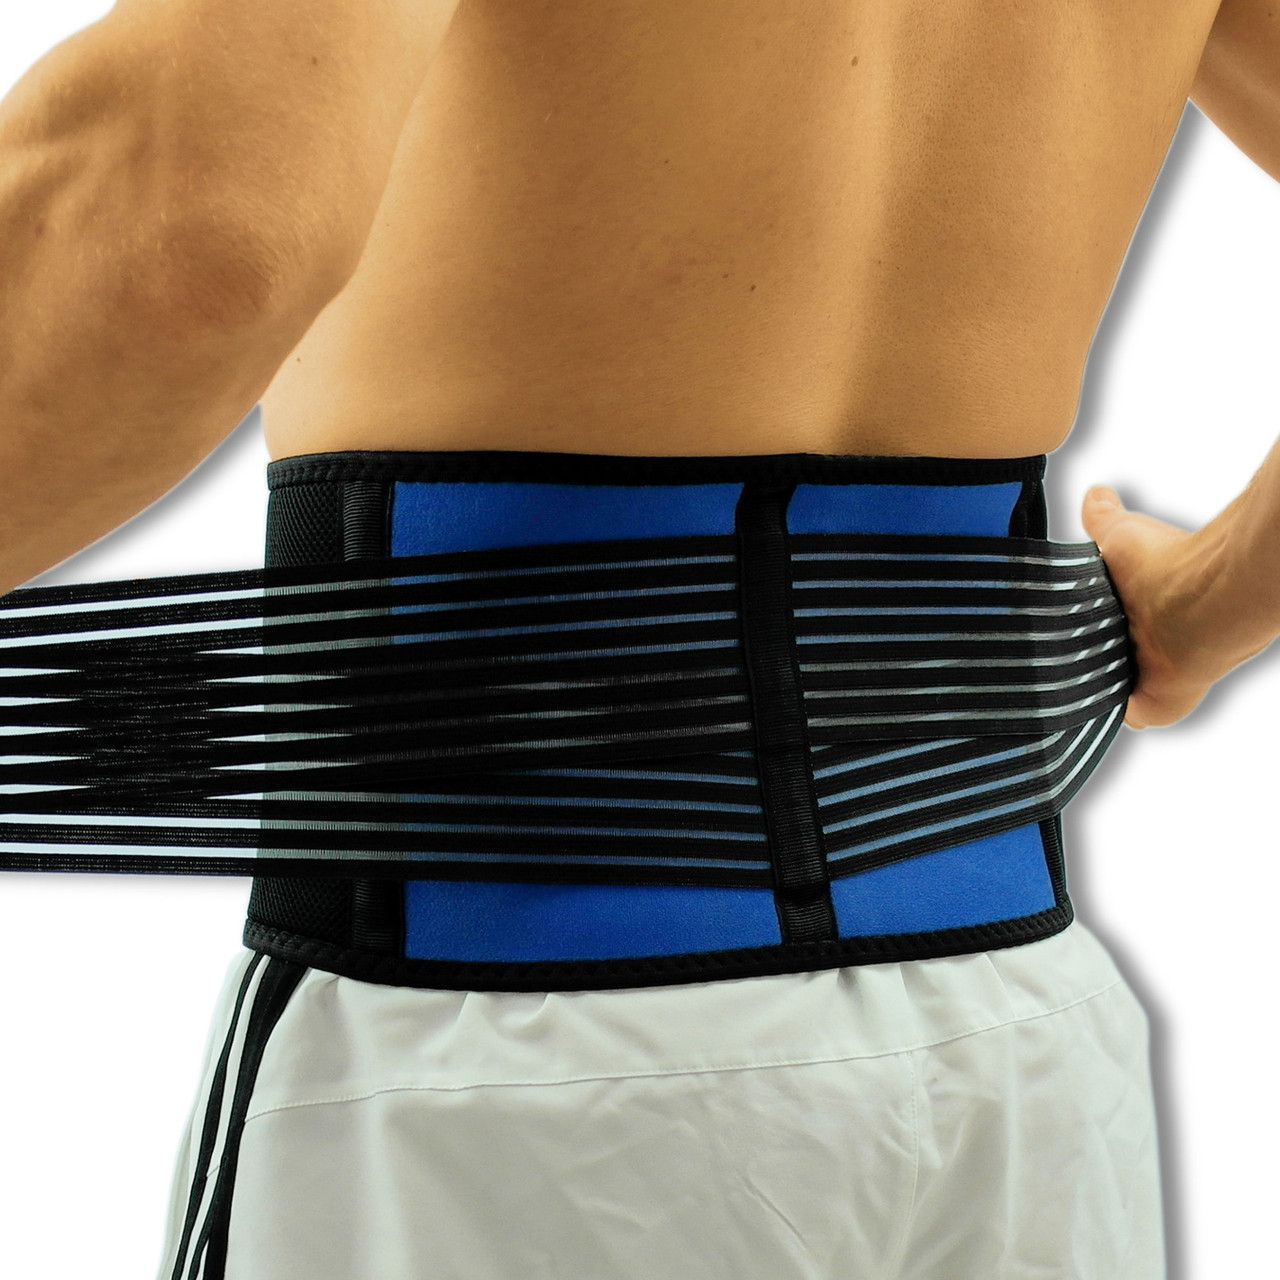 Flexible Neoprene Lumbar Support Belt Large